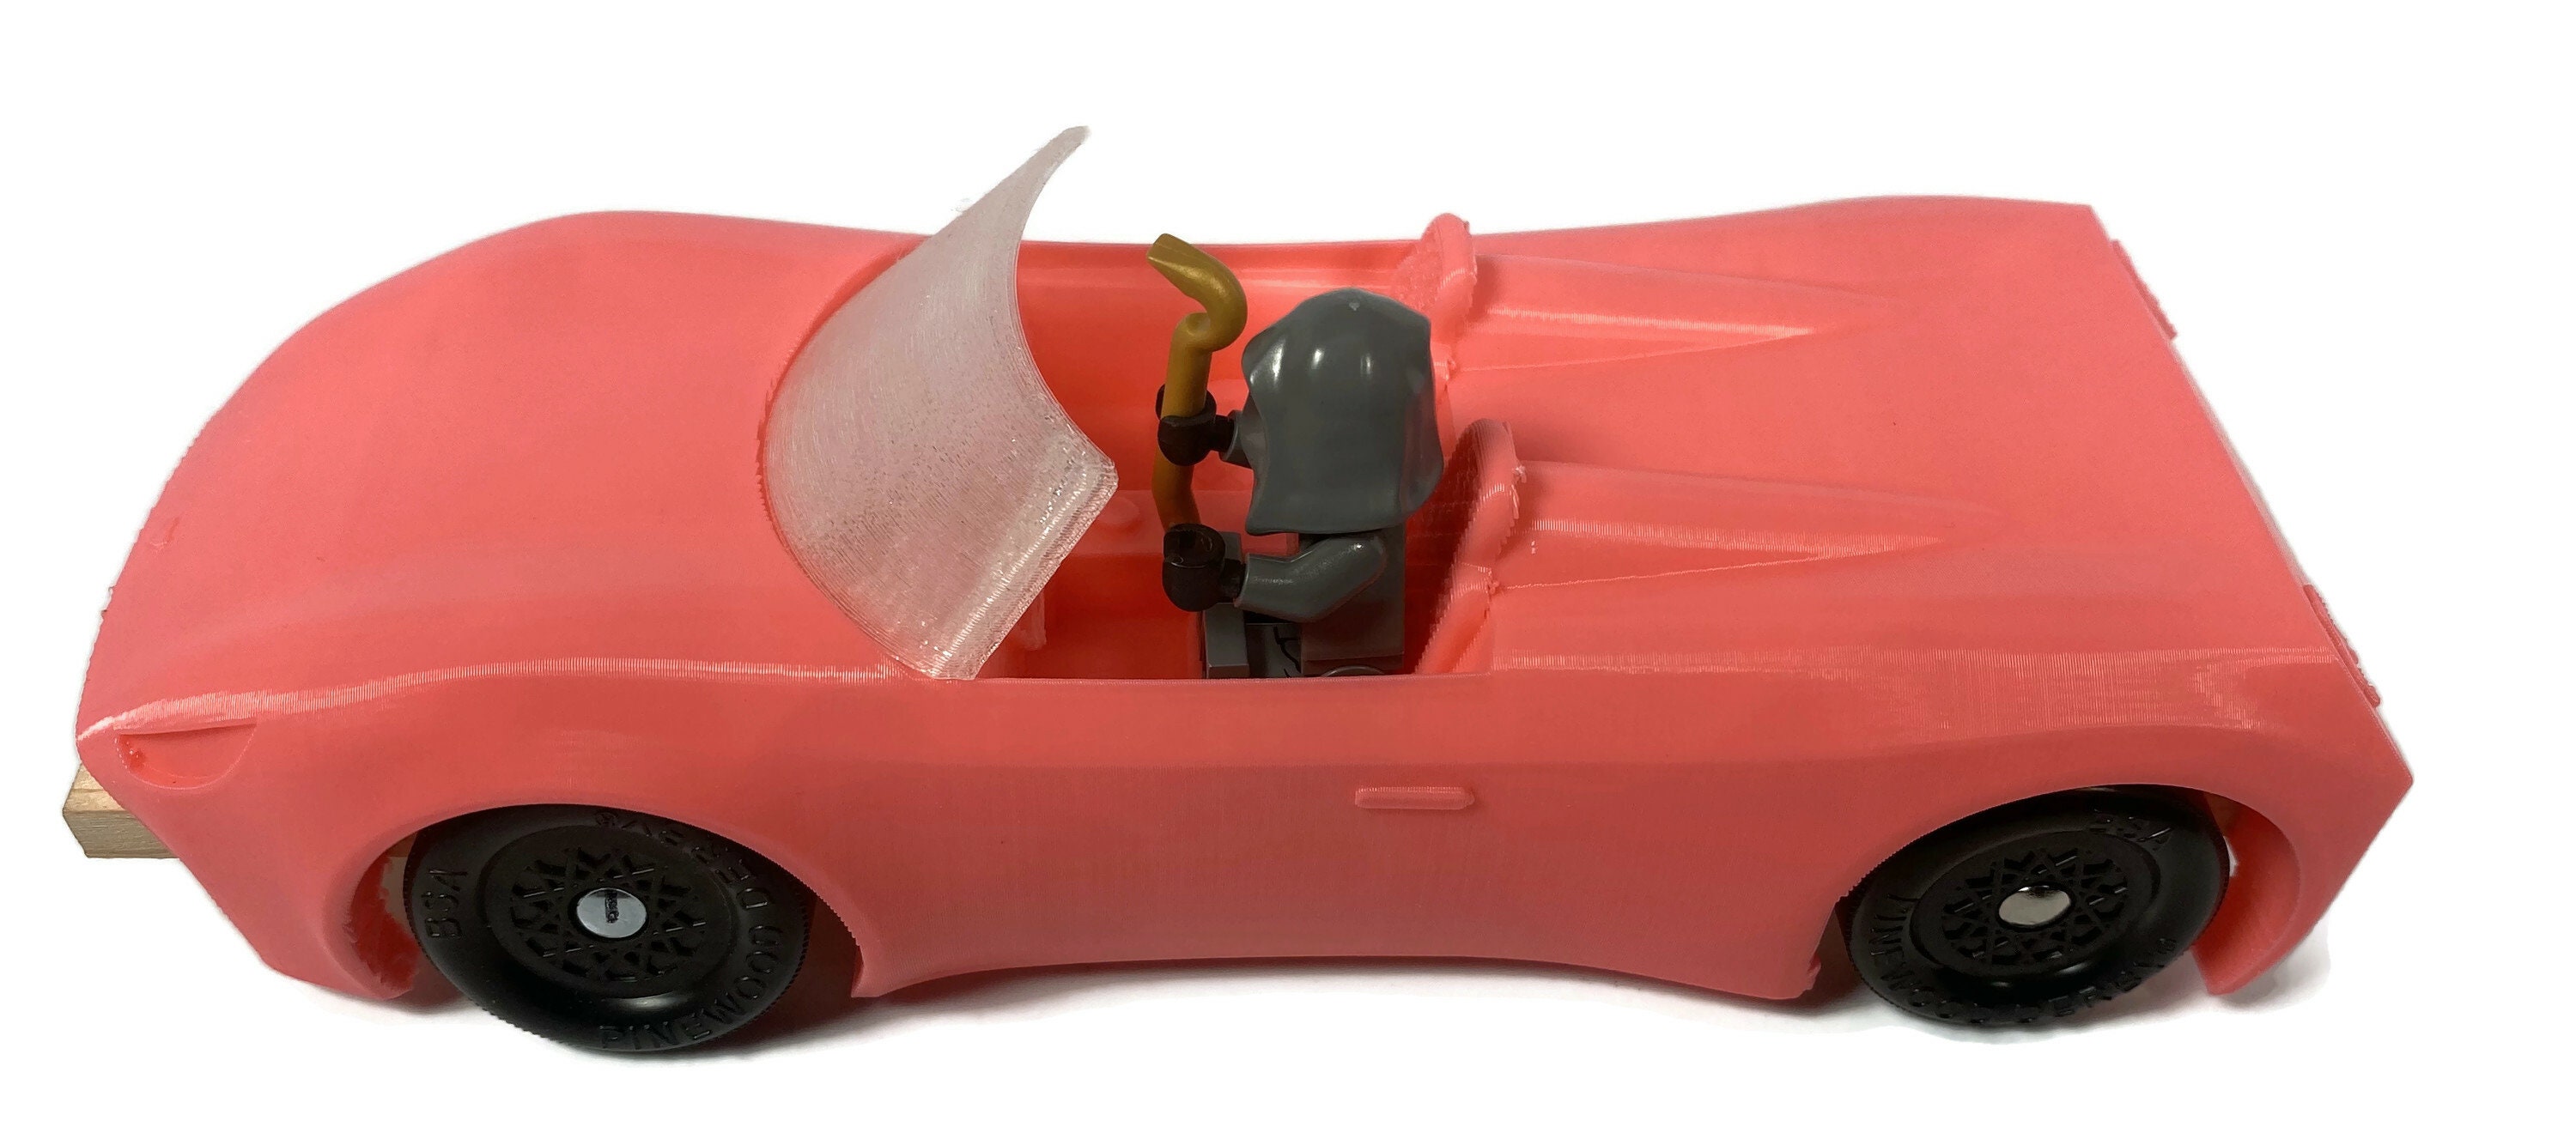 Pinewood Derby Car Body – 3D Printed Body